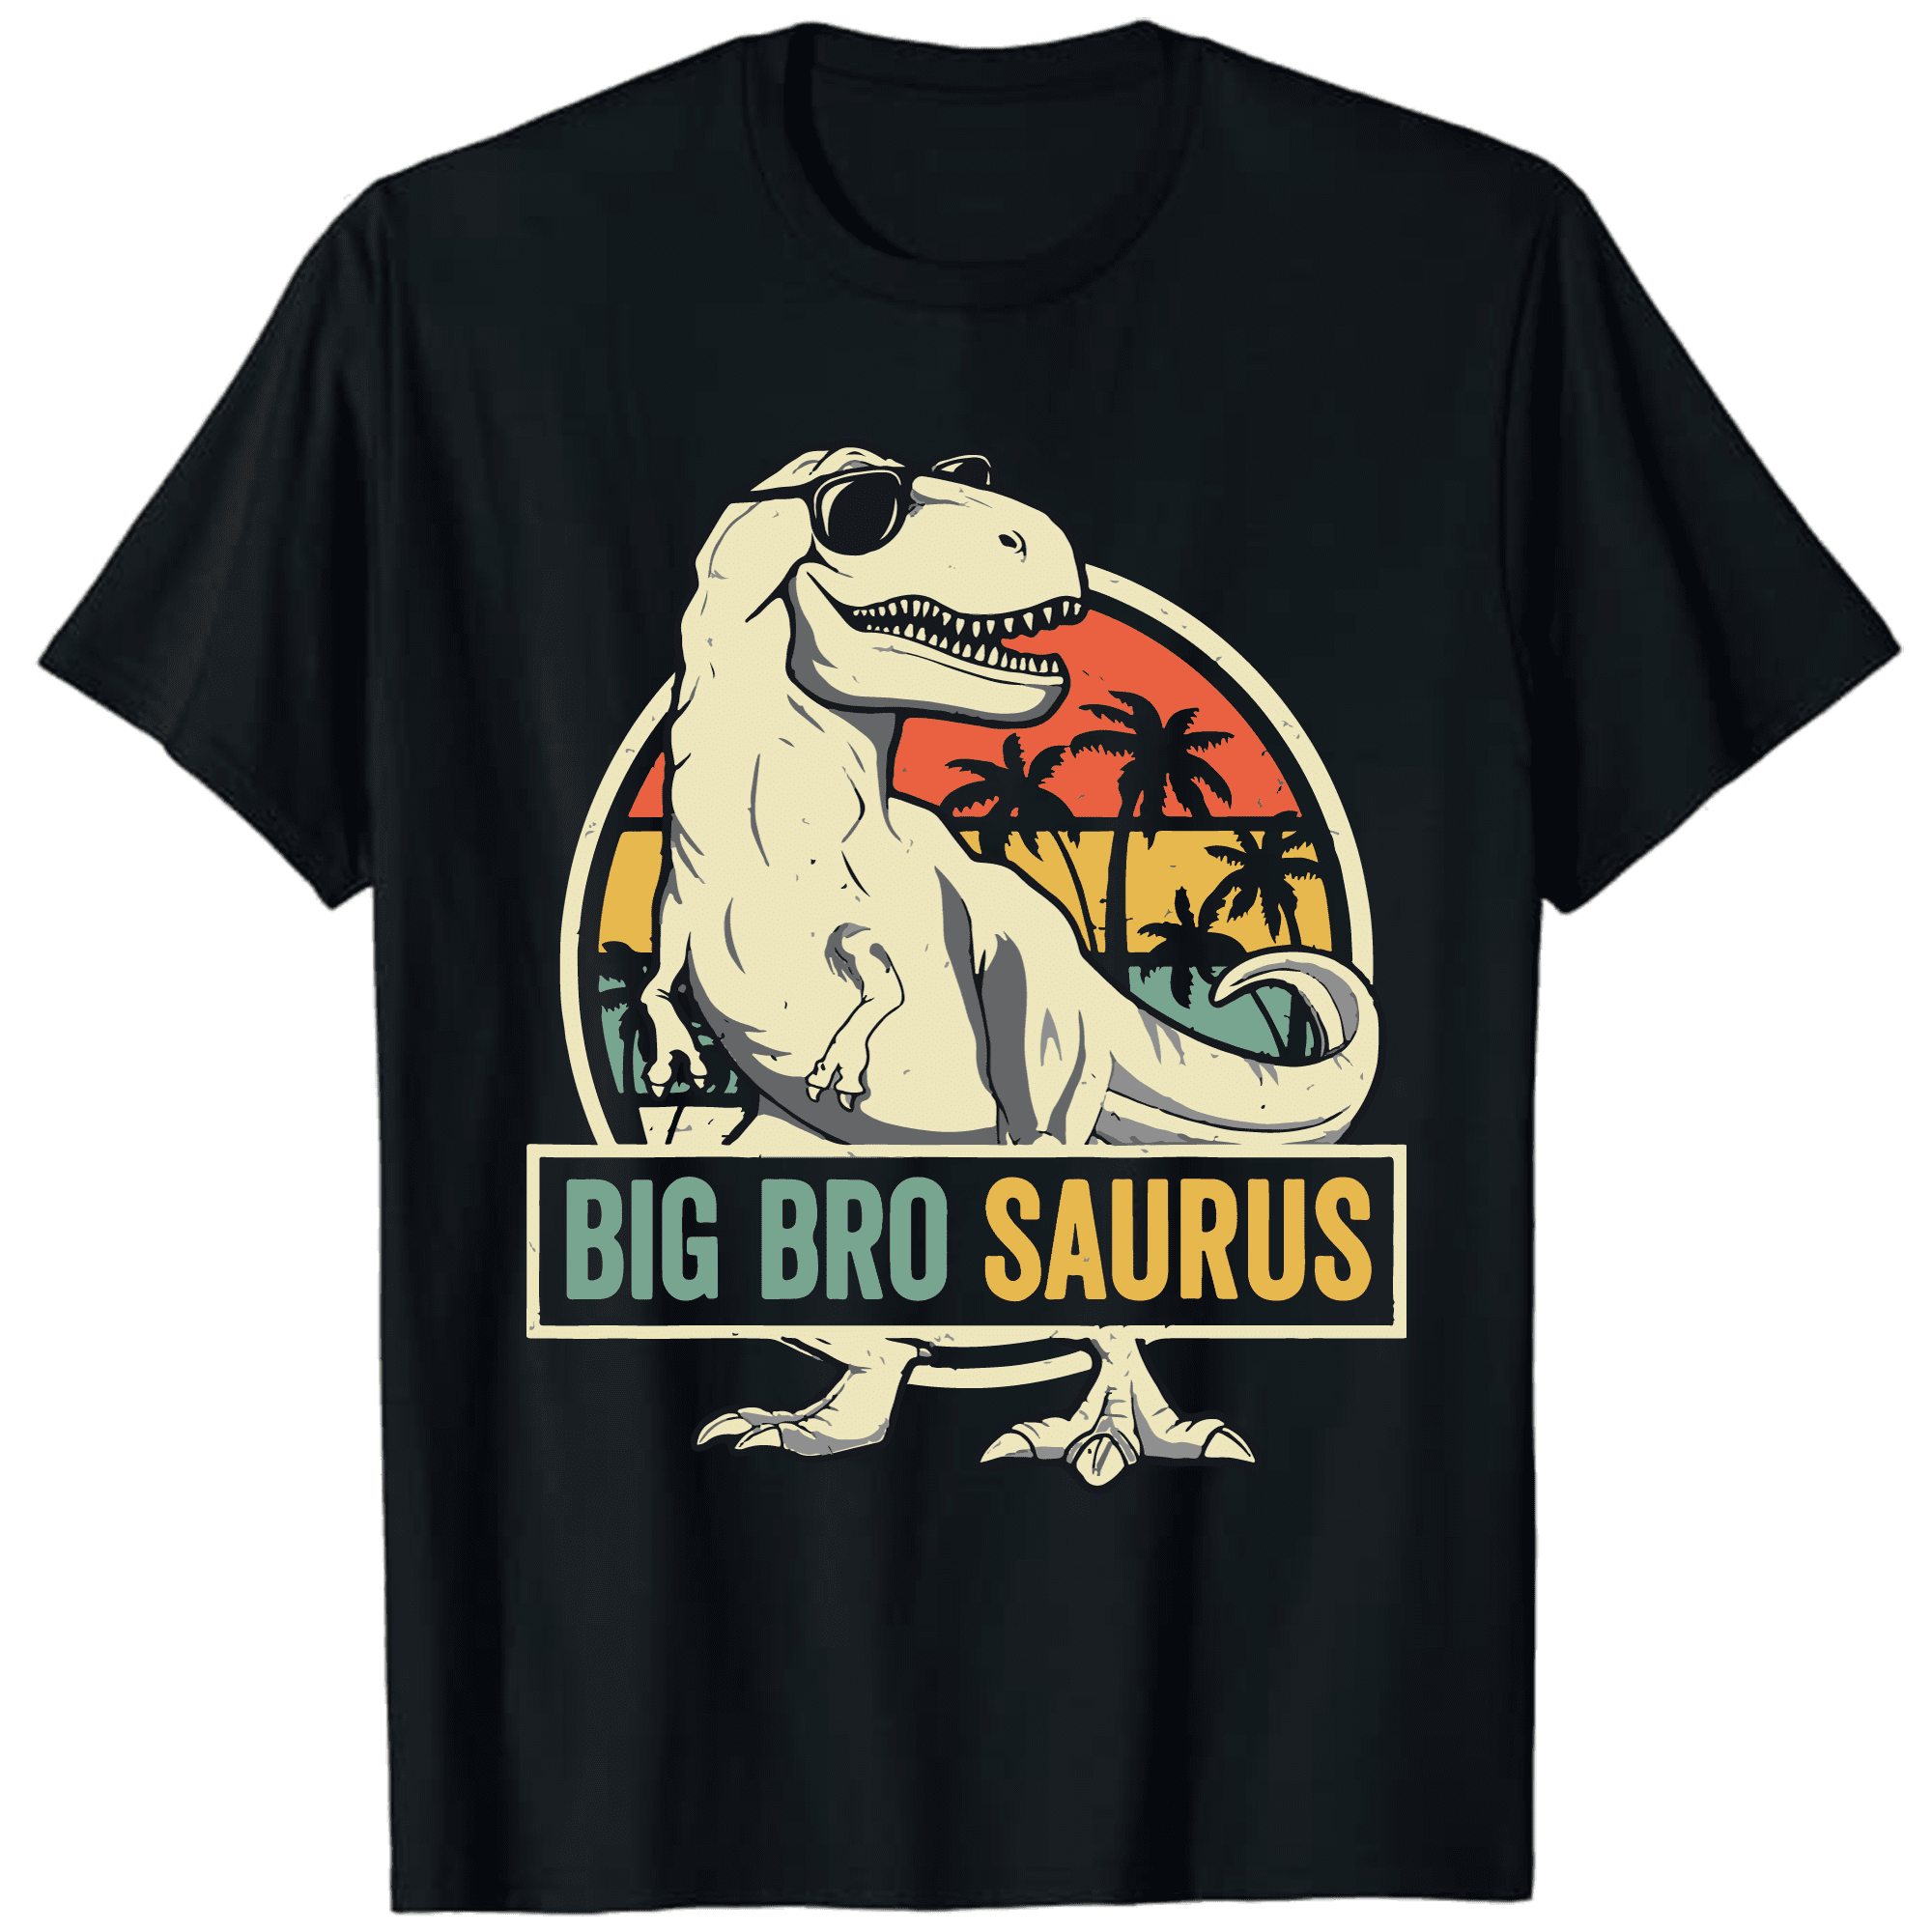 Big Bro Saurus Graphic T-Shirt for Boys T-Shirt Size 8 - Walmart.com